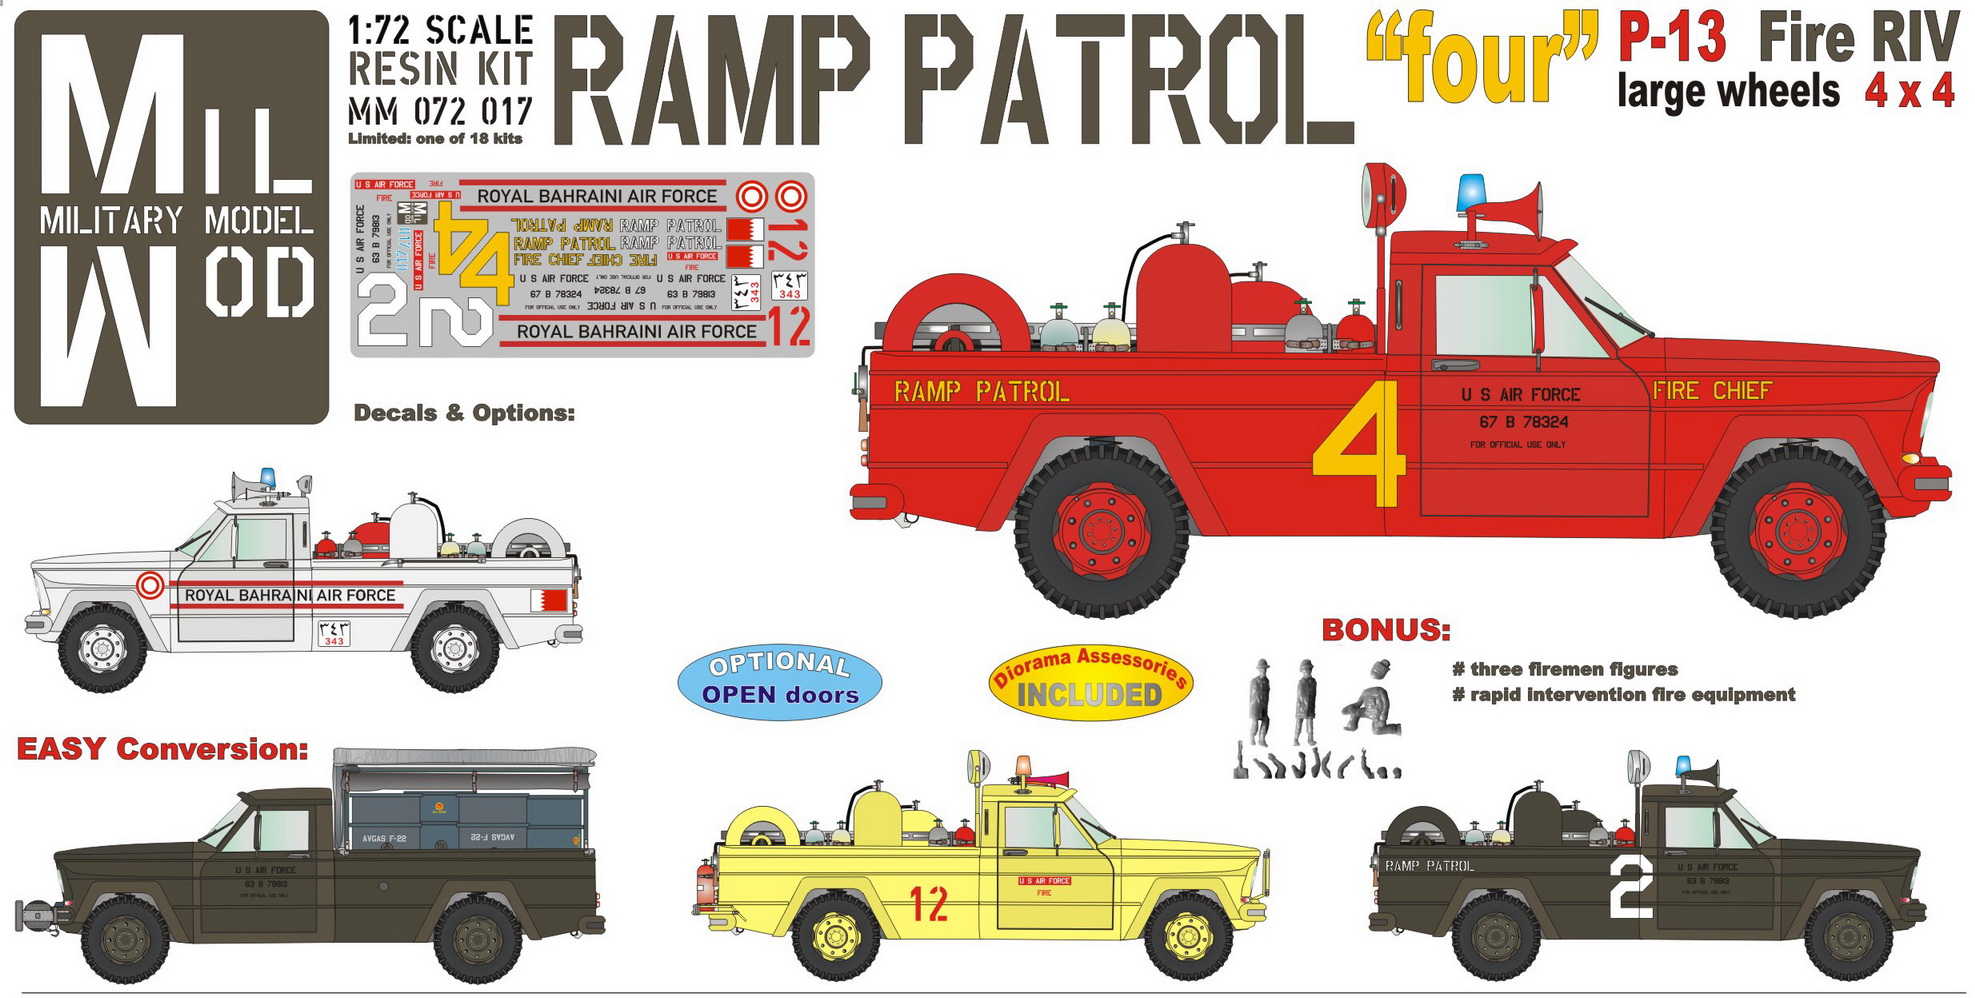 Jeep Gladiator Ramp Patrol "four" Fire RIV